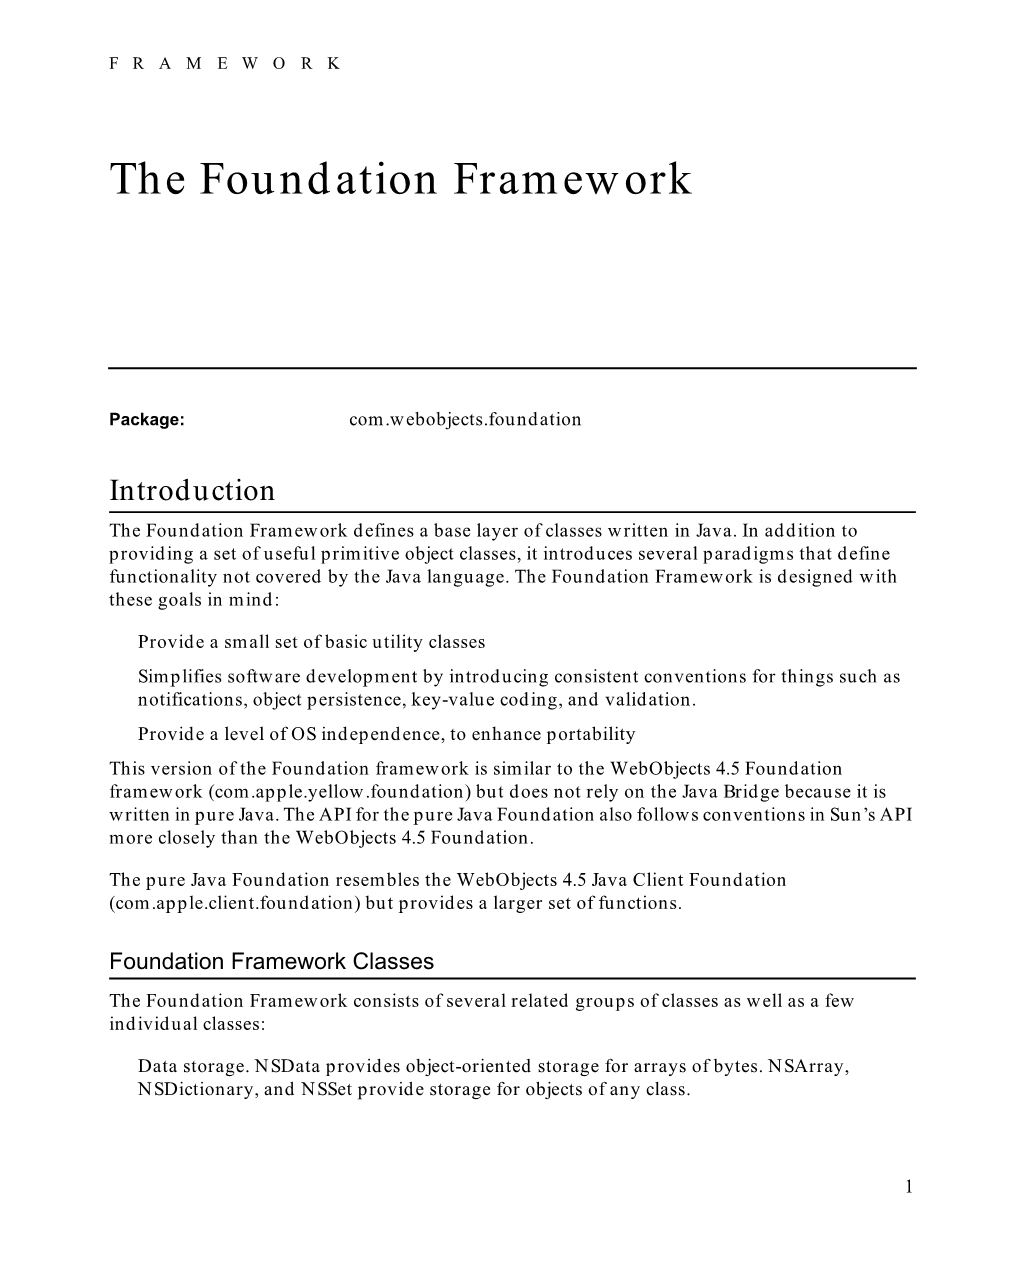 Java Foundation Framework